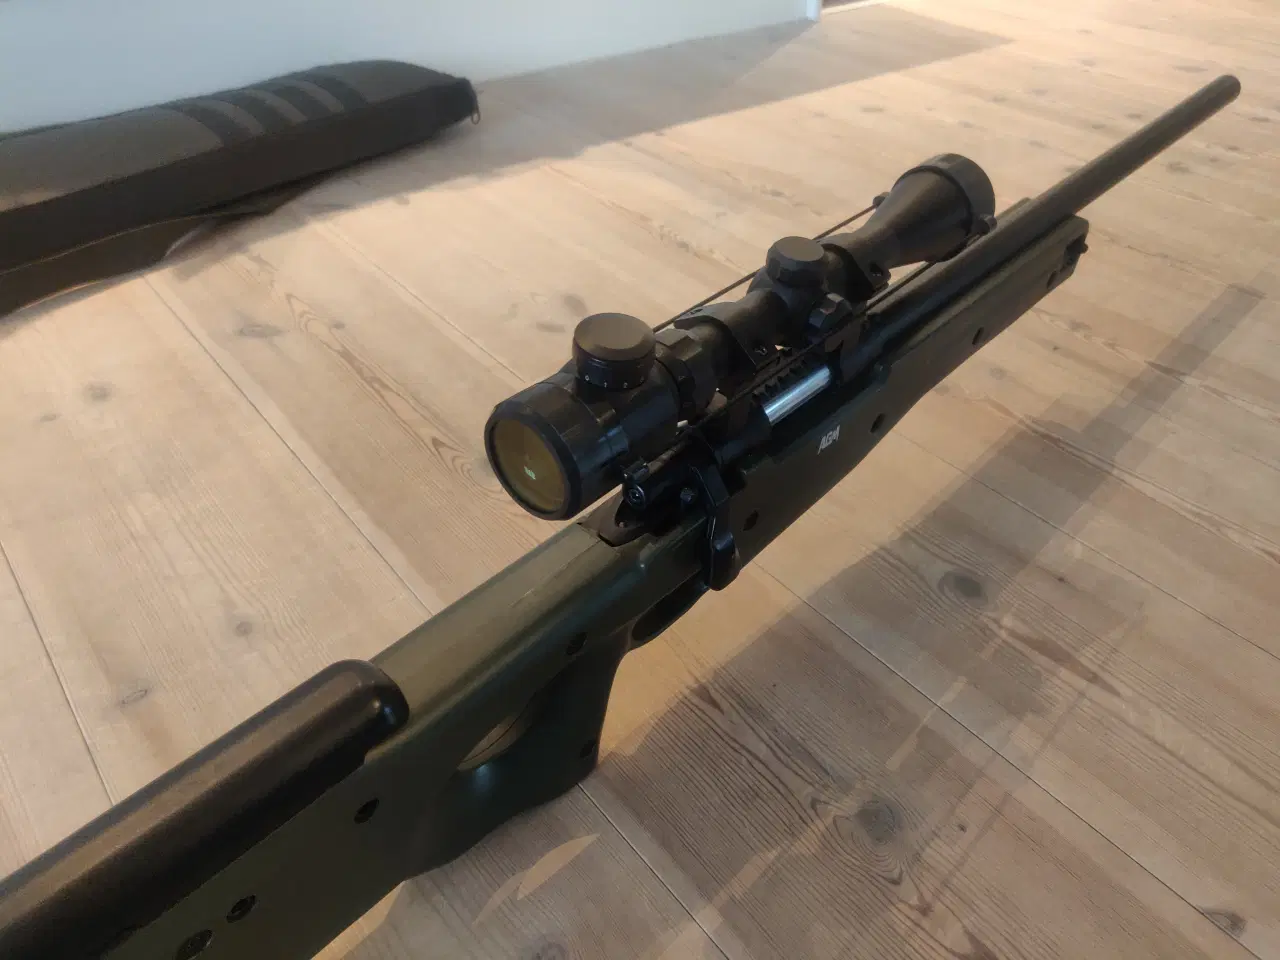 Billede 1 - Sniper rifle l96a1 3-9x40 scope med lys hardball 